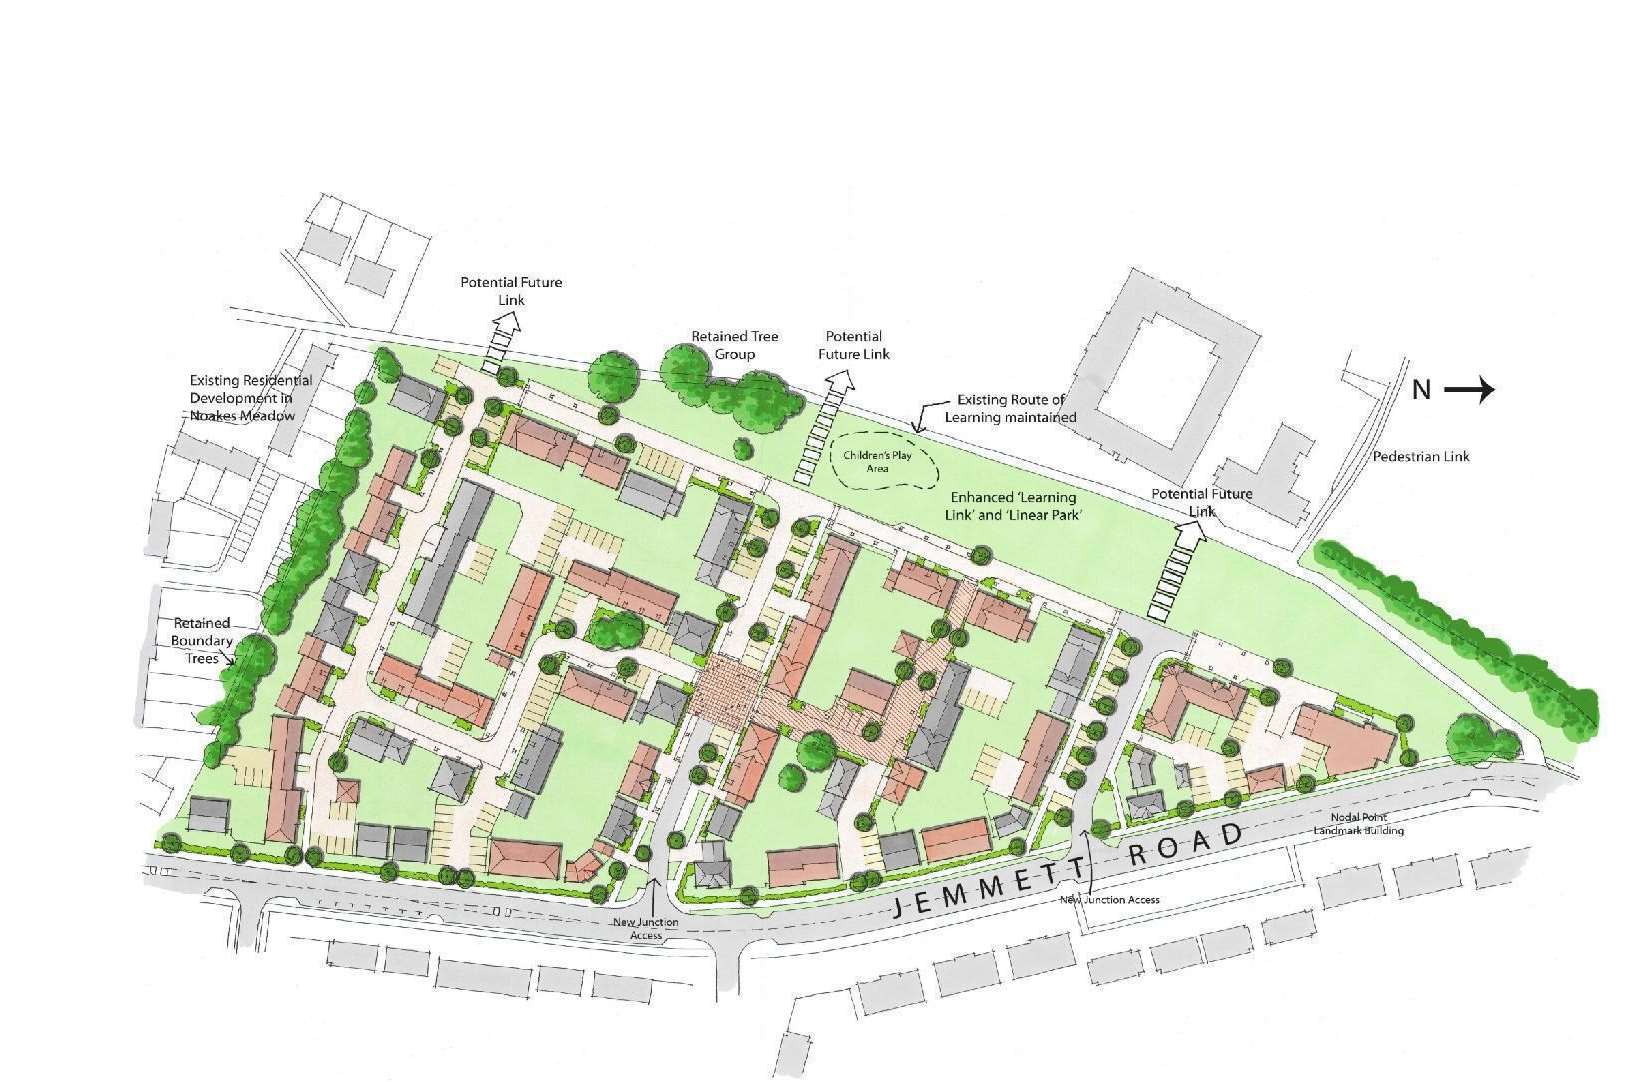 The plans for 160 homes at Jemmett Road in Ashford.